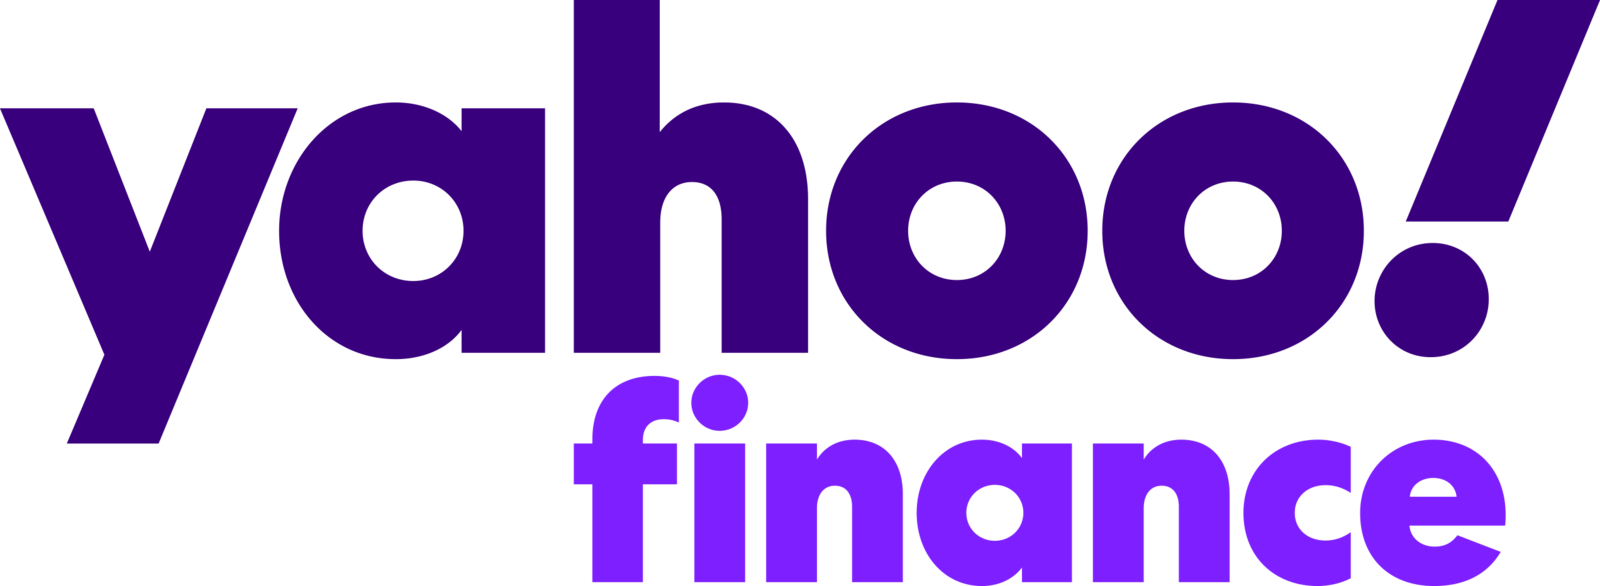 Yahoo finance logo on a black background.